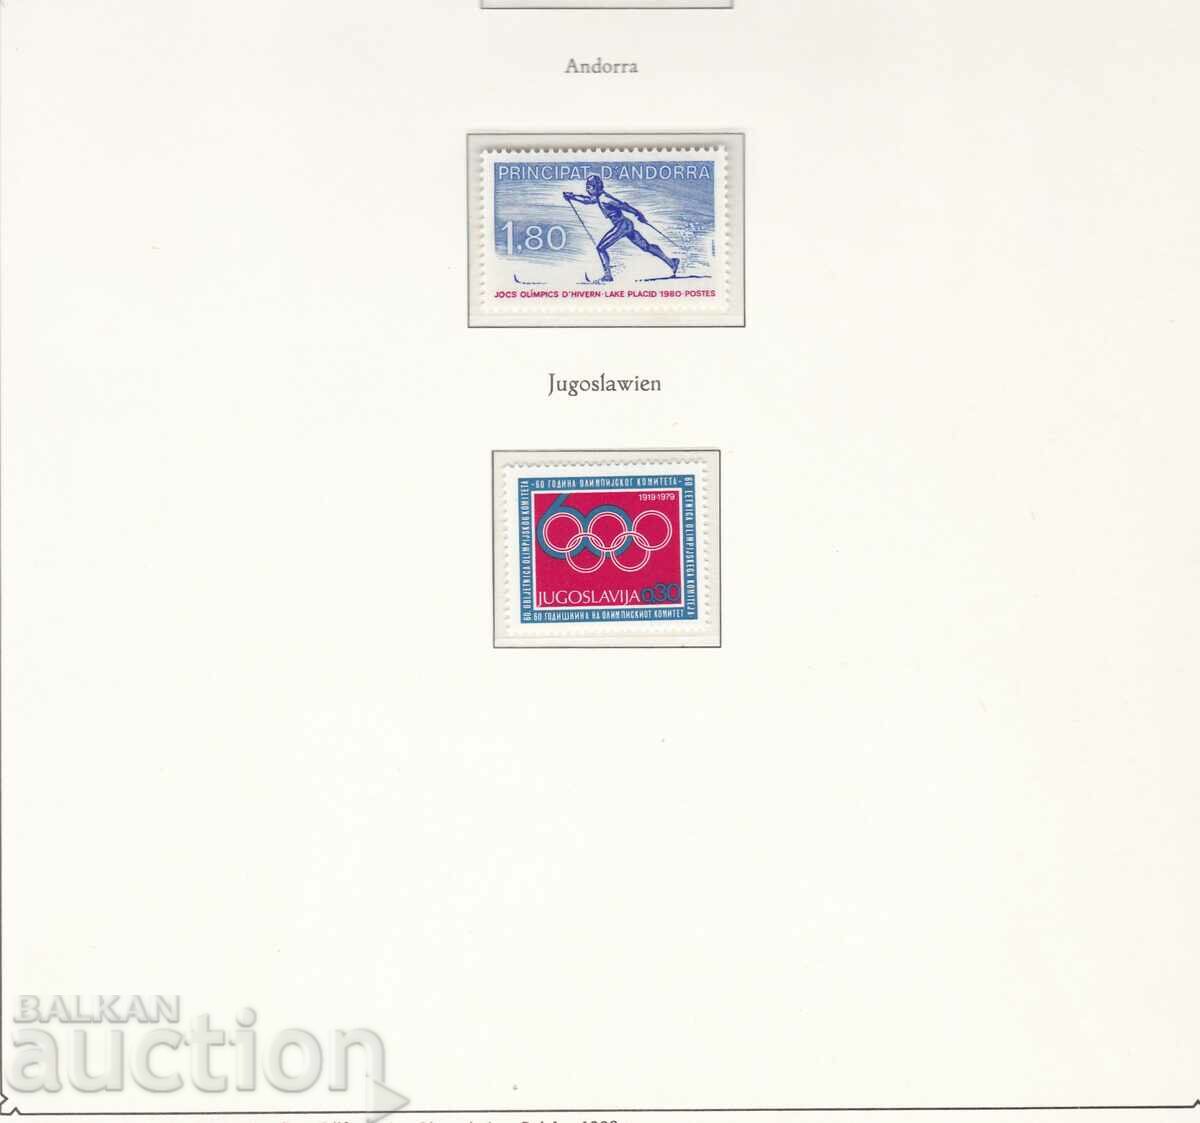 1980 Jocurile Olimpice din Andorra Iugoslavia Moscova 1980